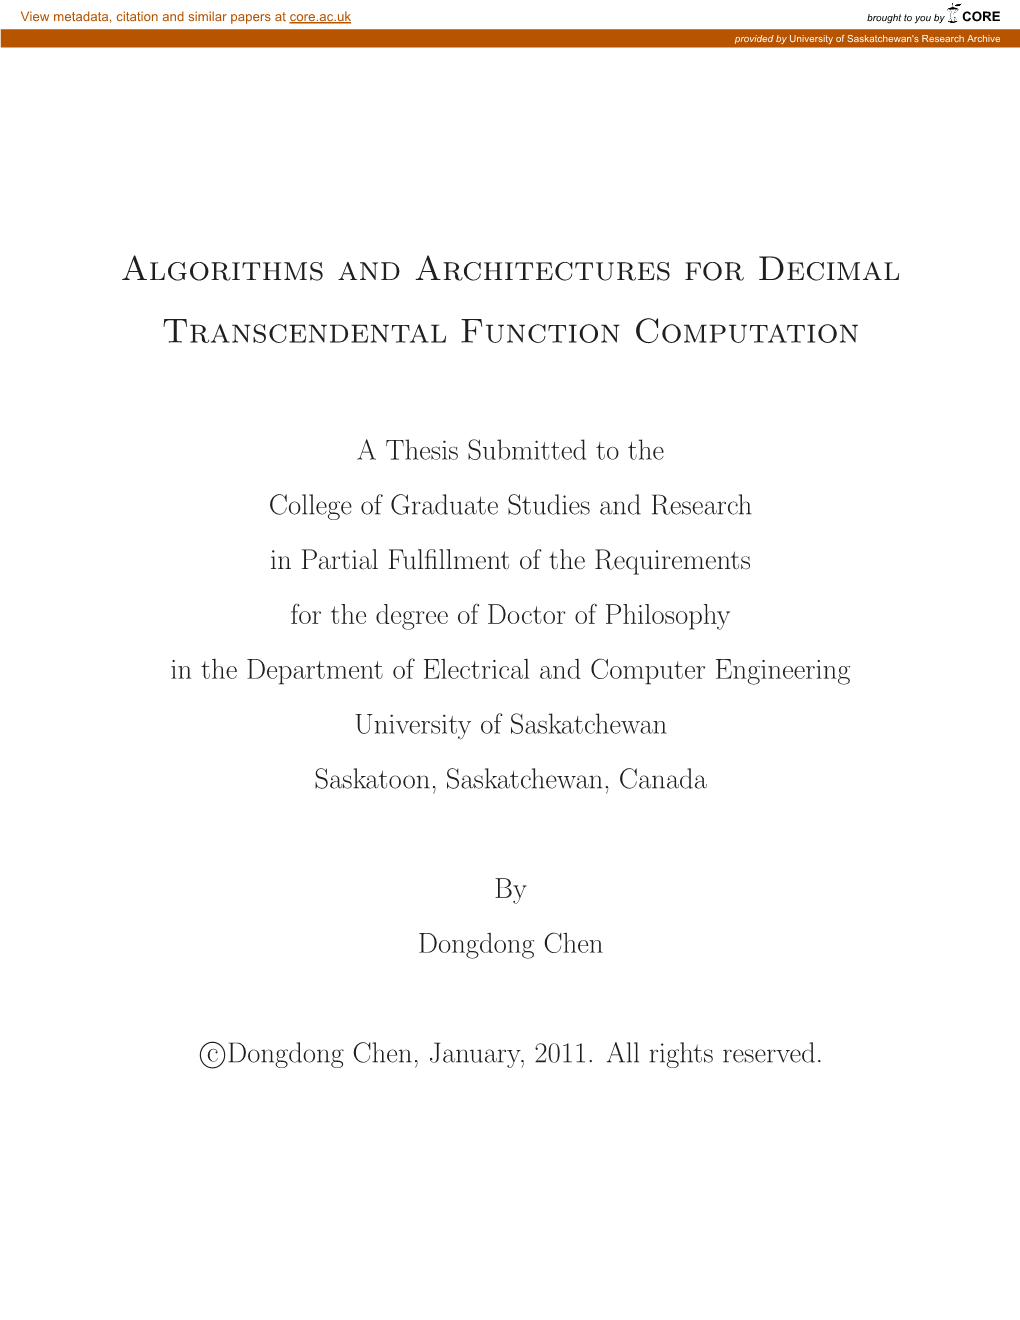 Algorithms and Architectures for Decimal Transcendental Function Computation